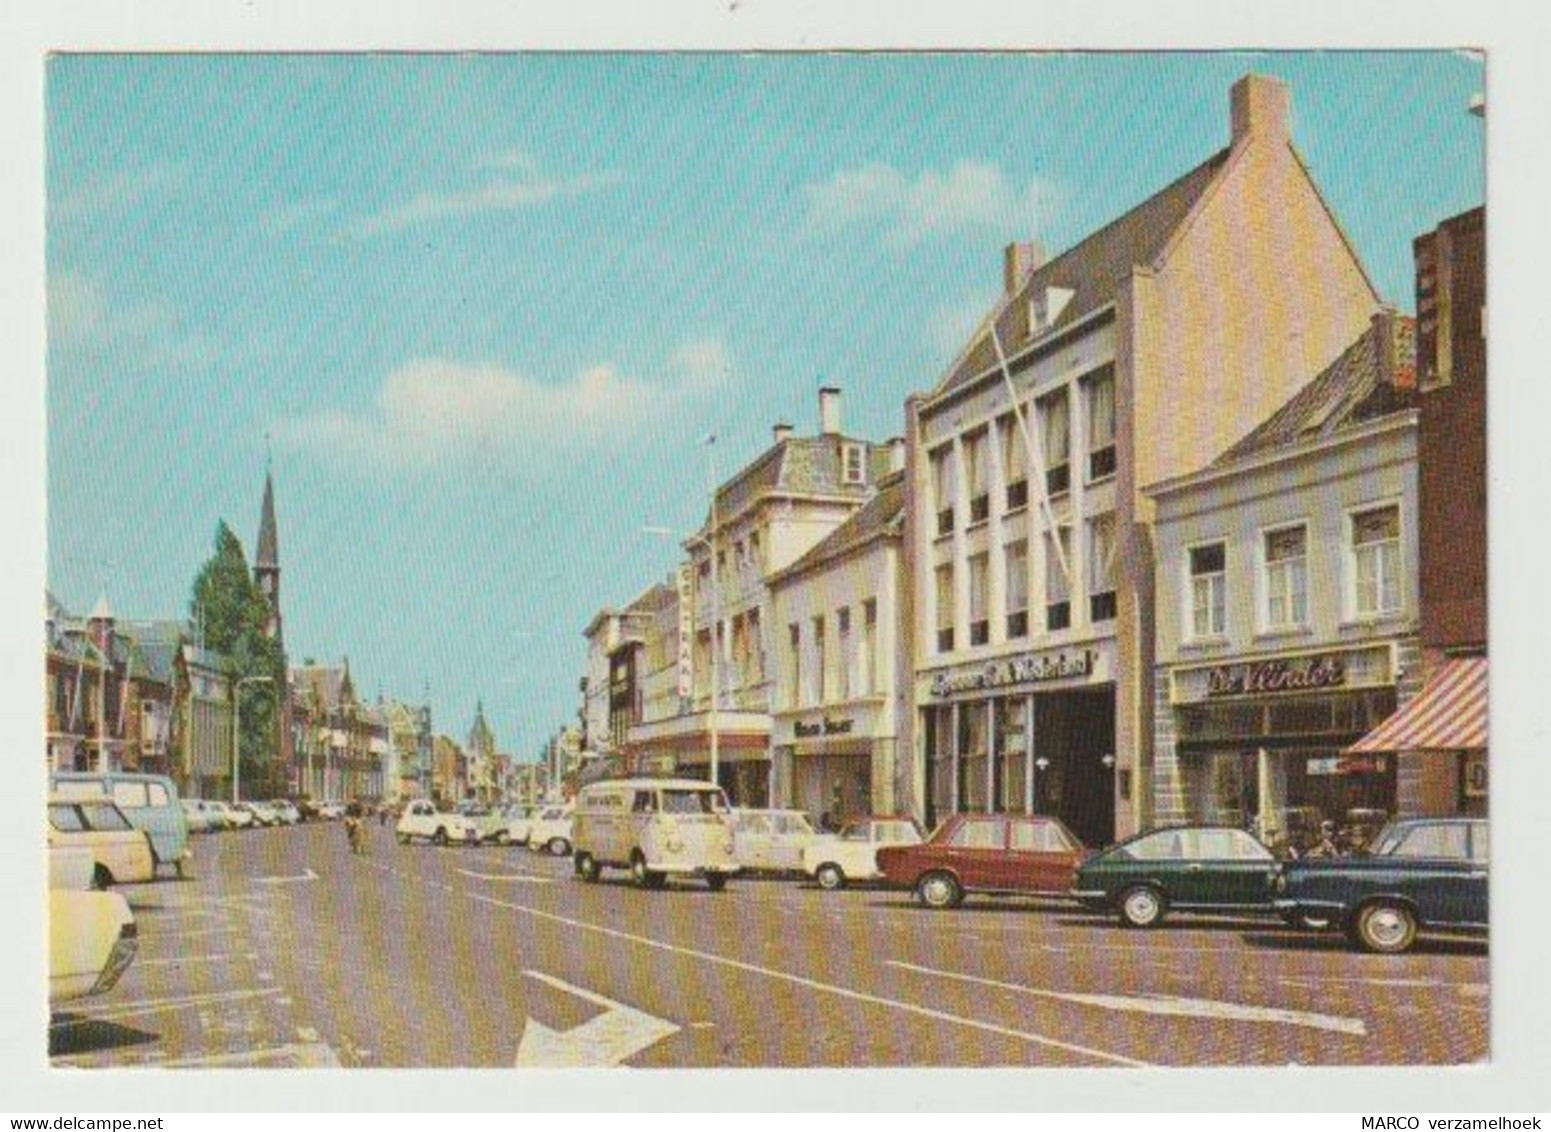 Postcard-ansichtkaart: Markt-centrum Helmond (NL) 1967 - Helmond